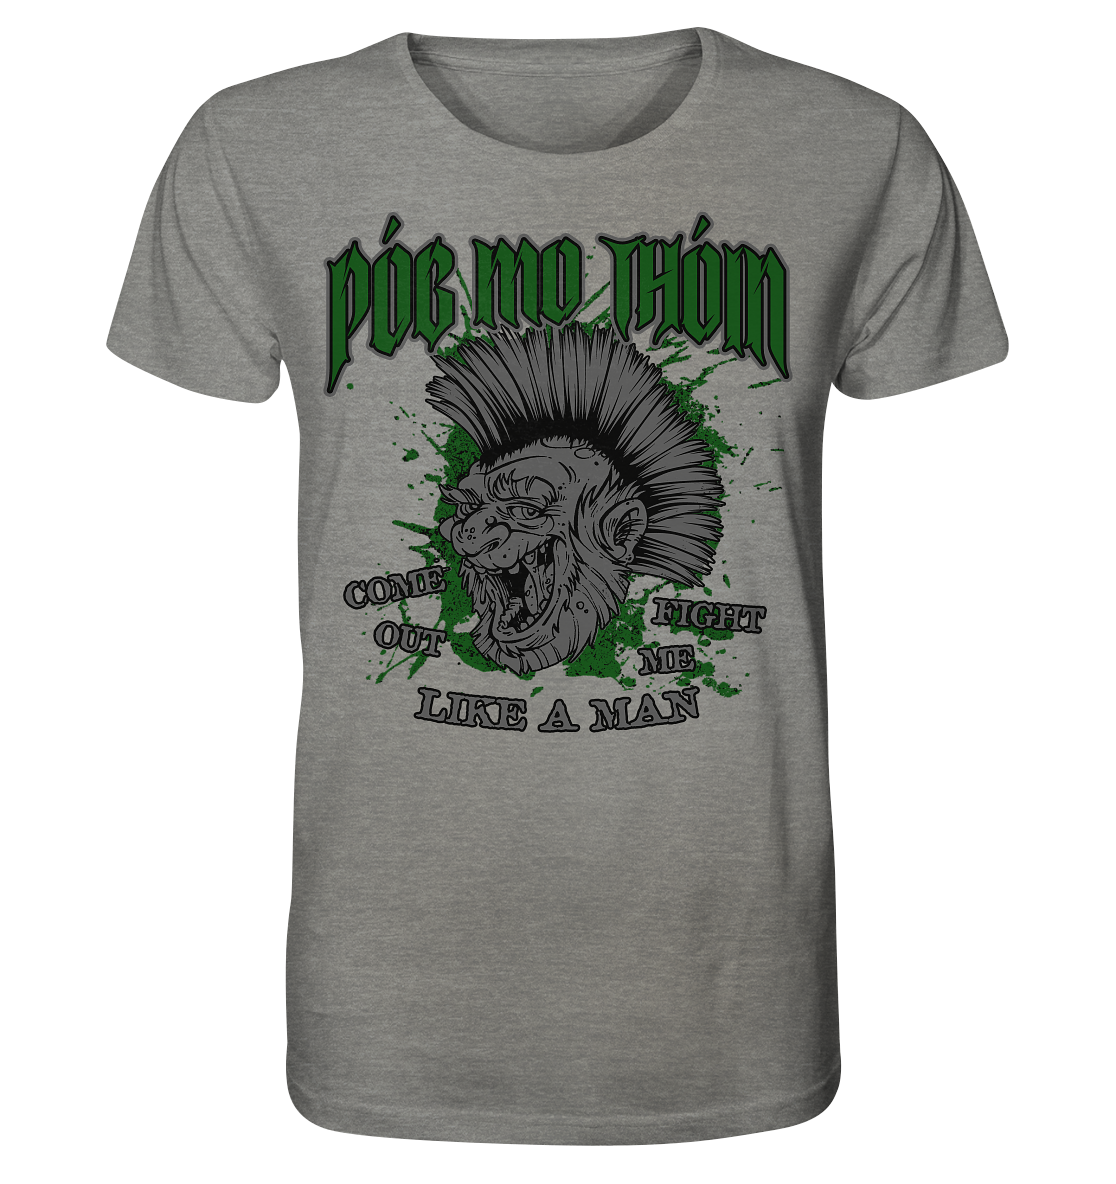 Póg Mo Thóin Streetwear "Come Out" - Organic Shirt (meliert)